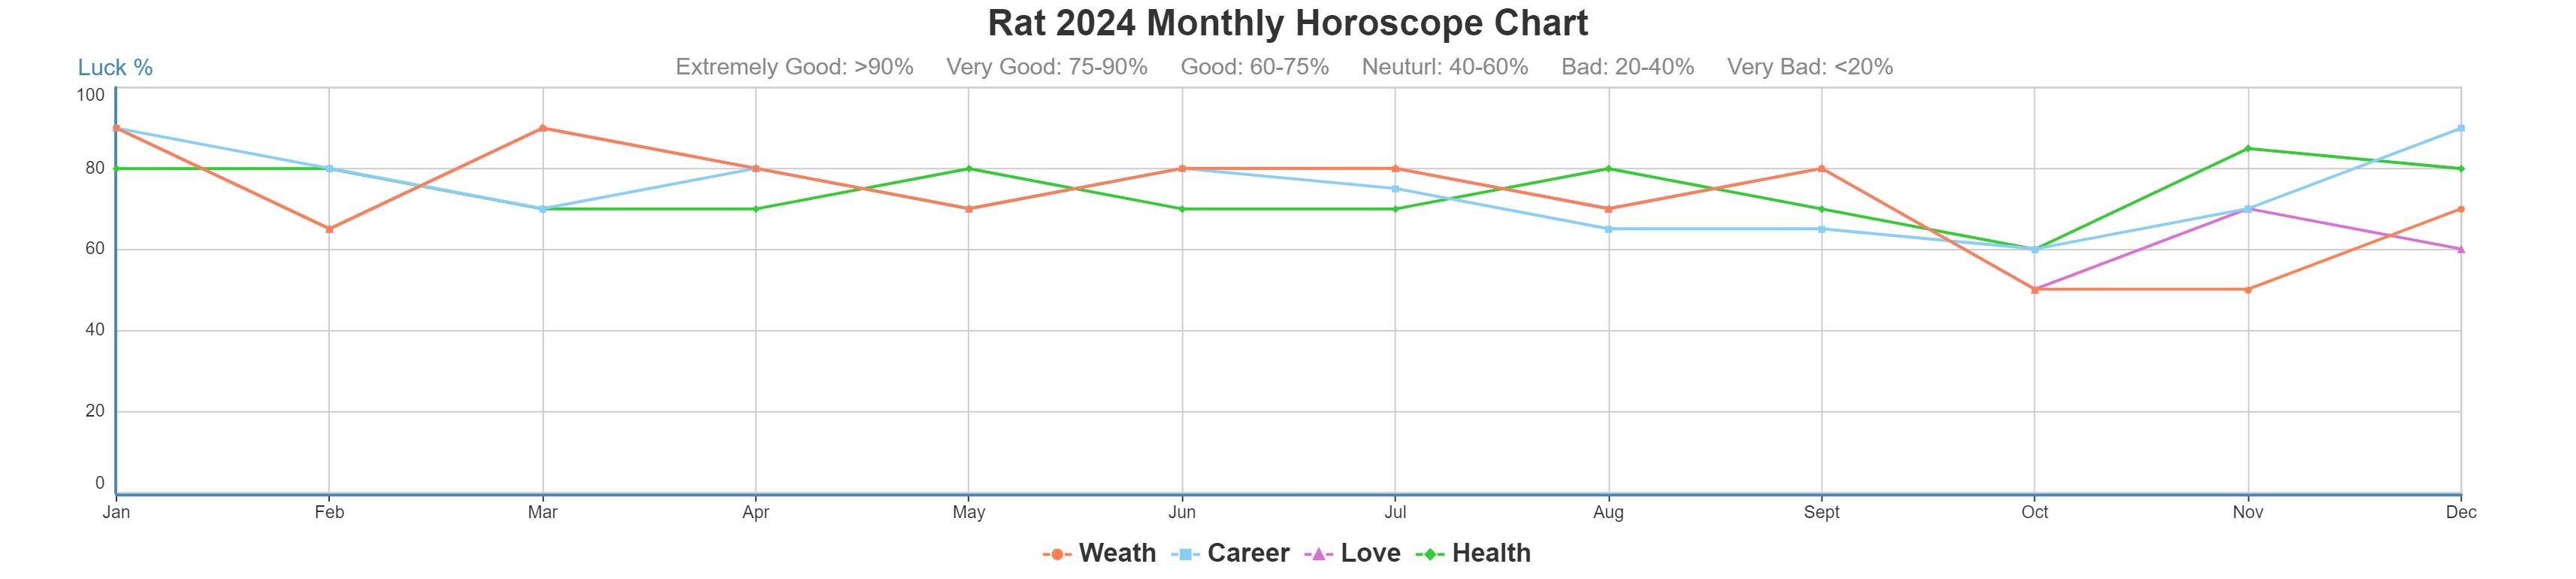 2024 Monthly Horoscope for Rat Zodiac Sign